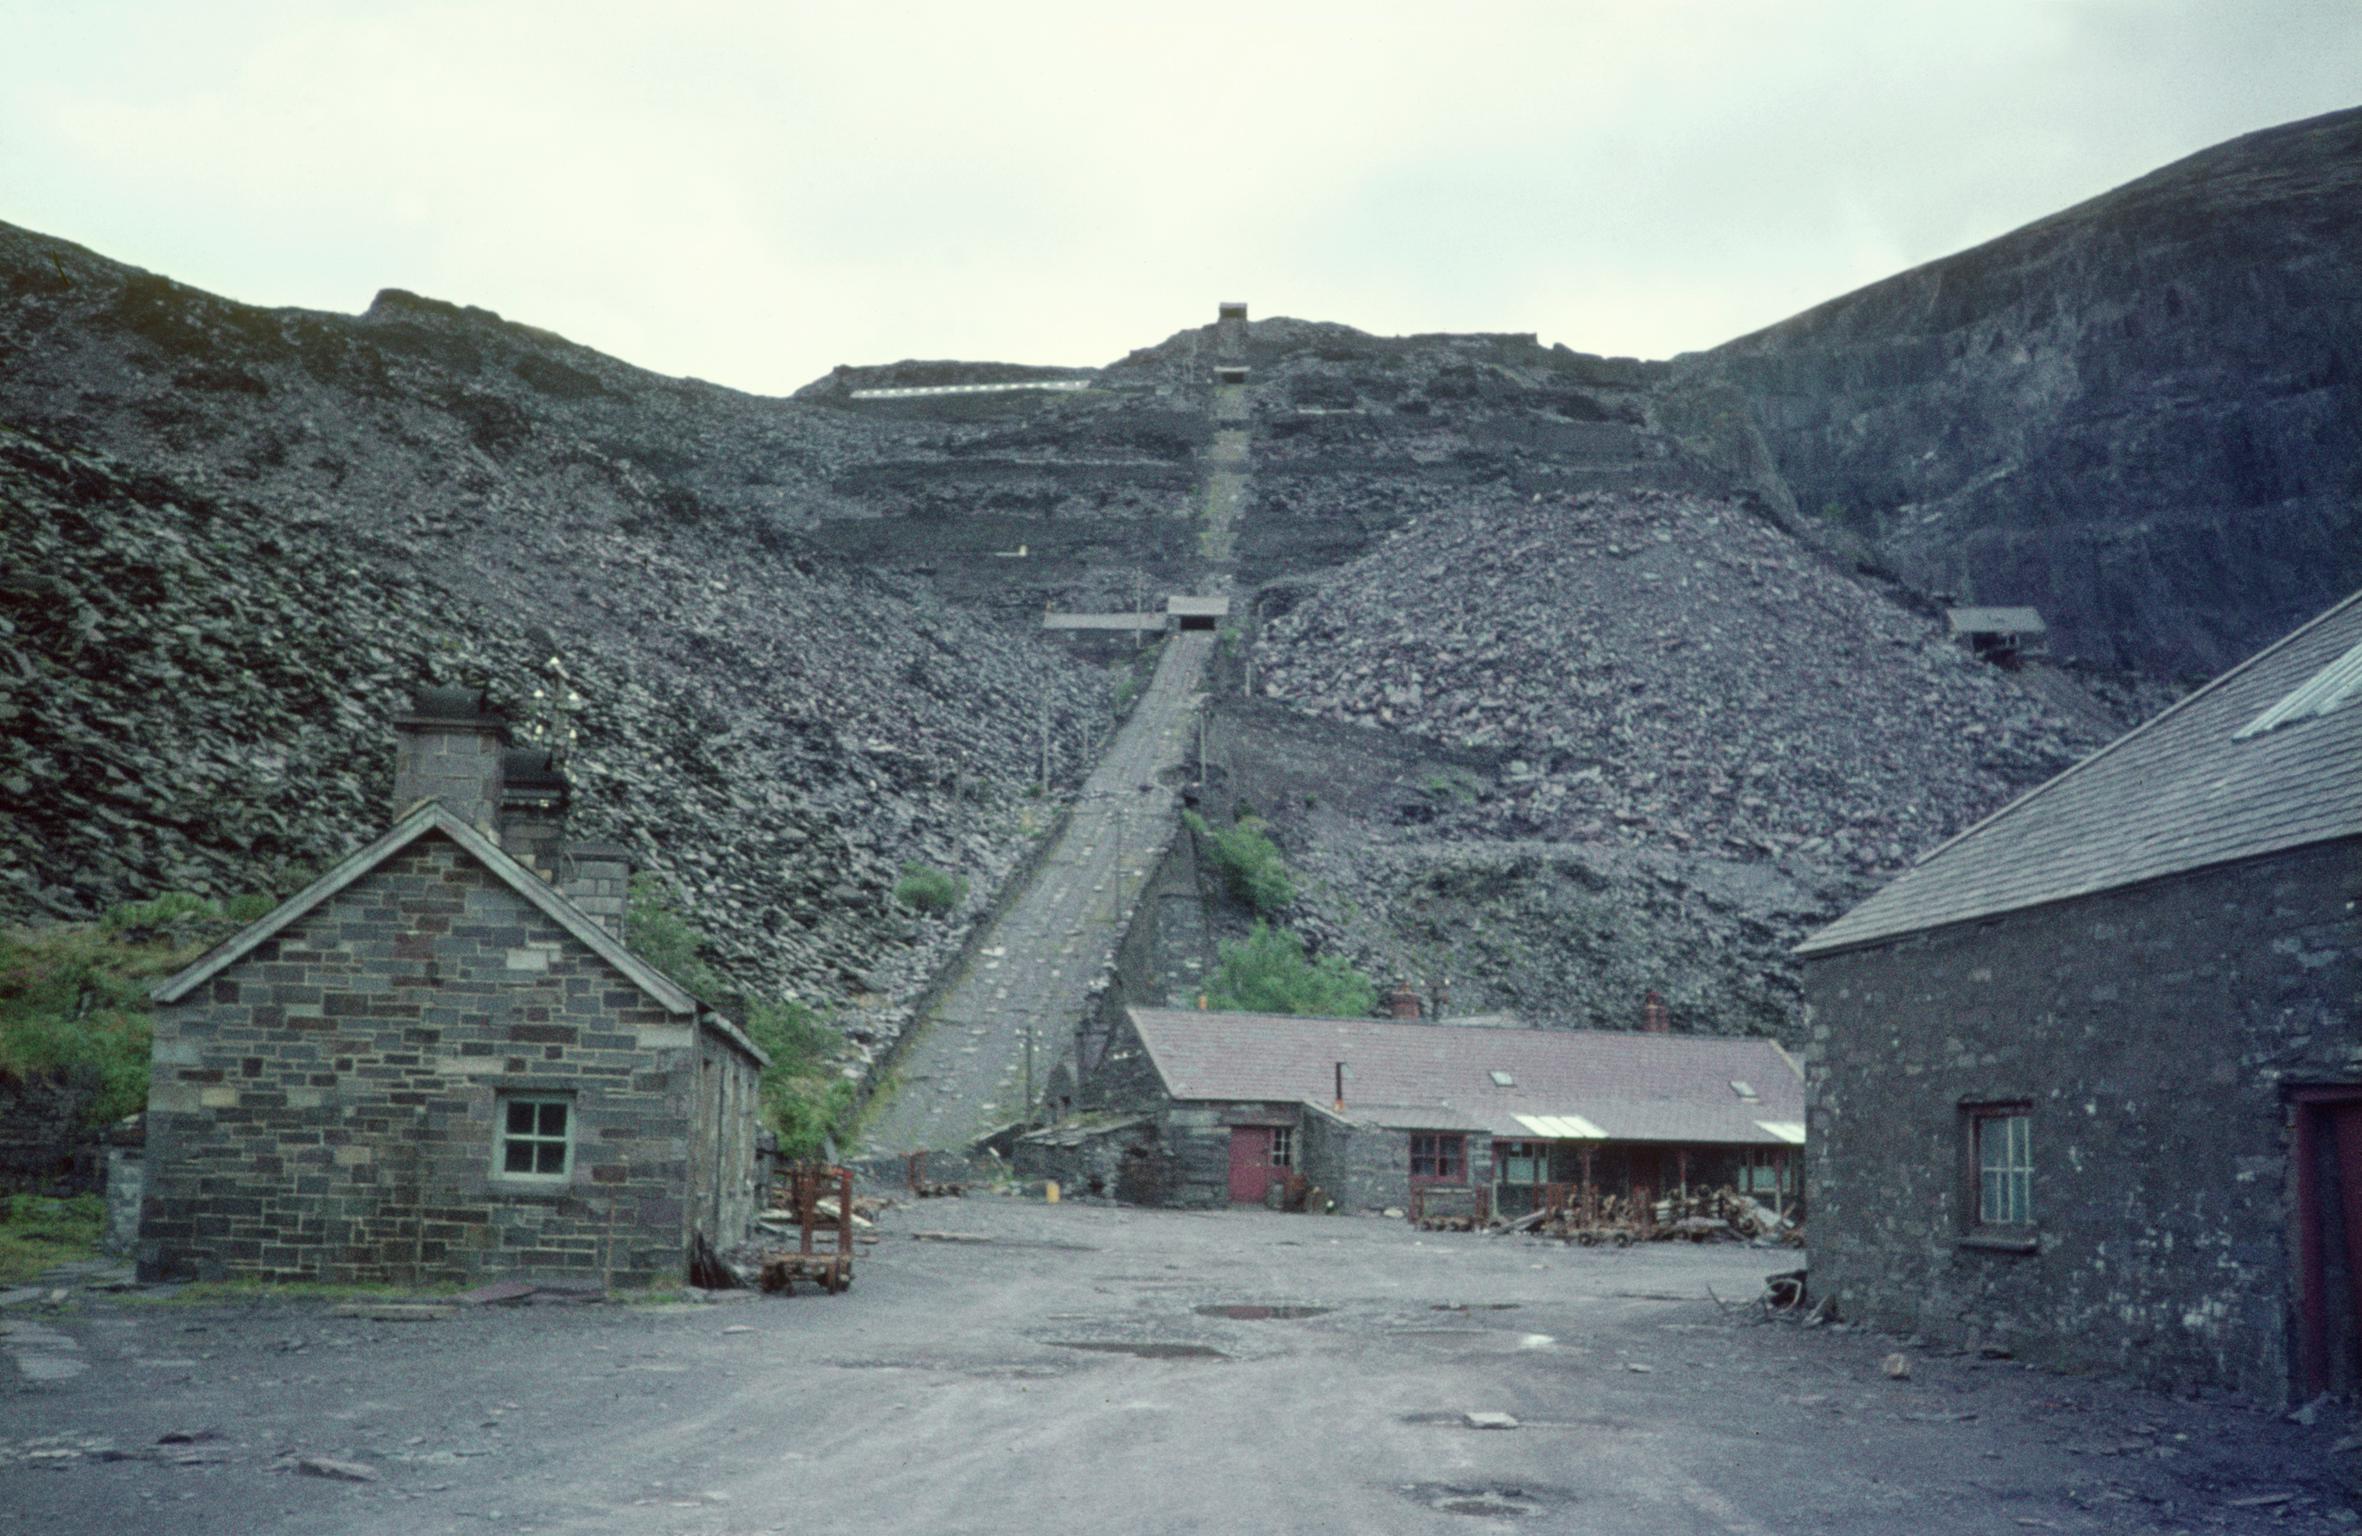 Dinorwig slate quarry, slide